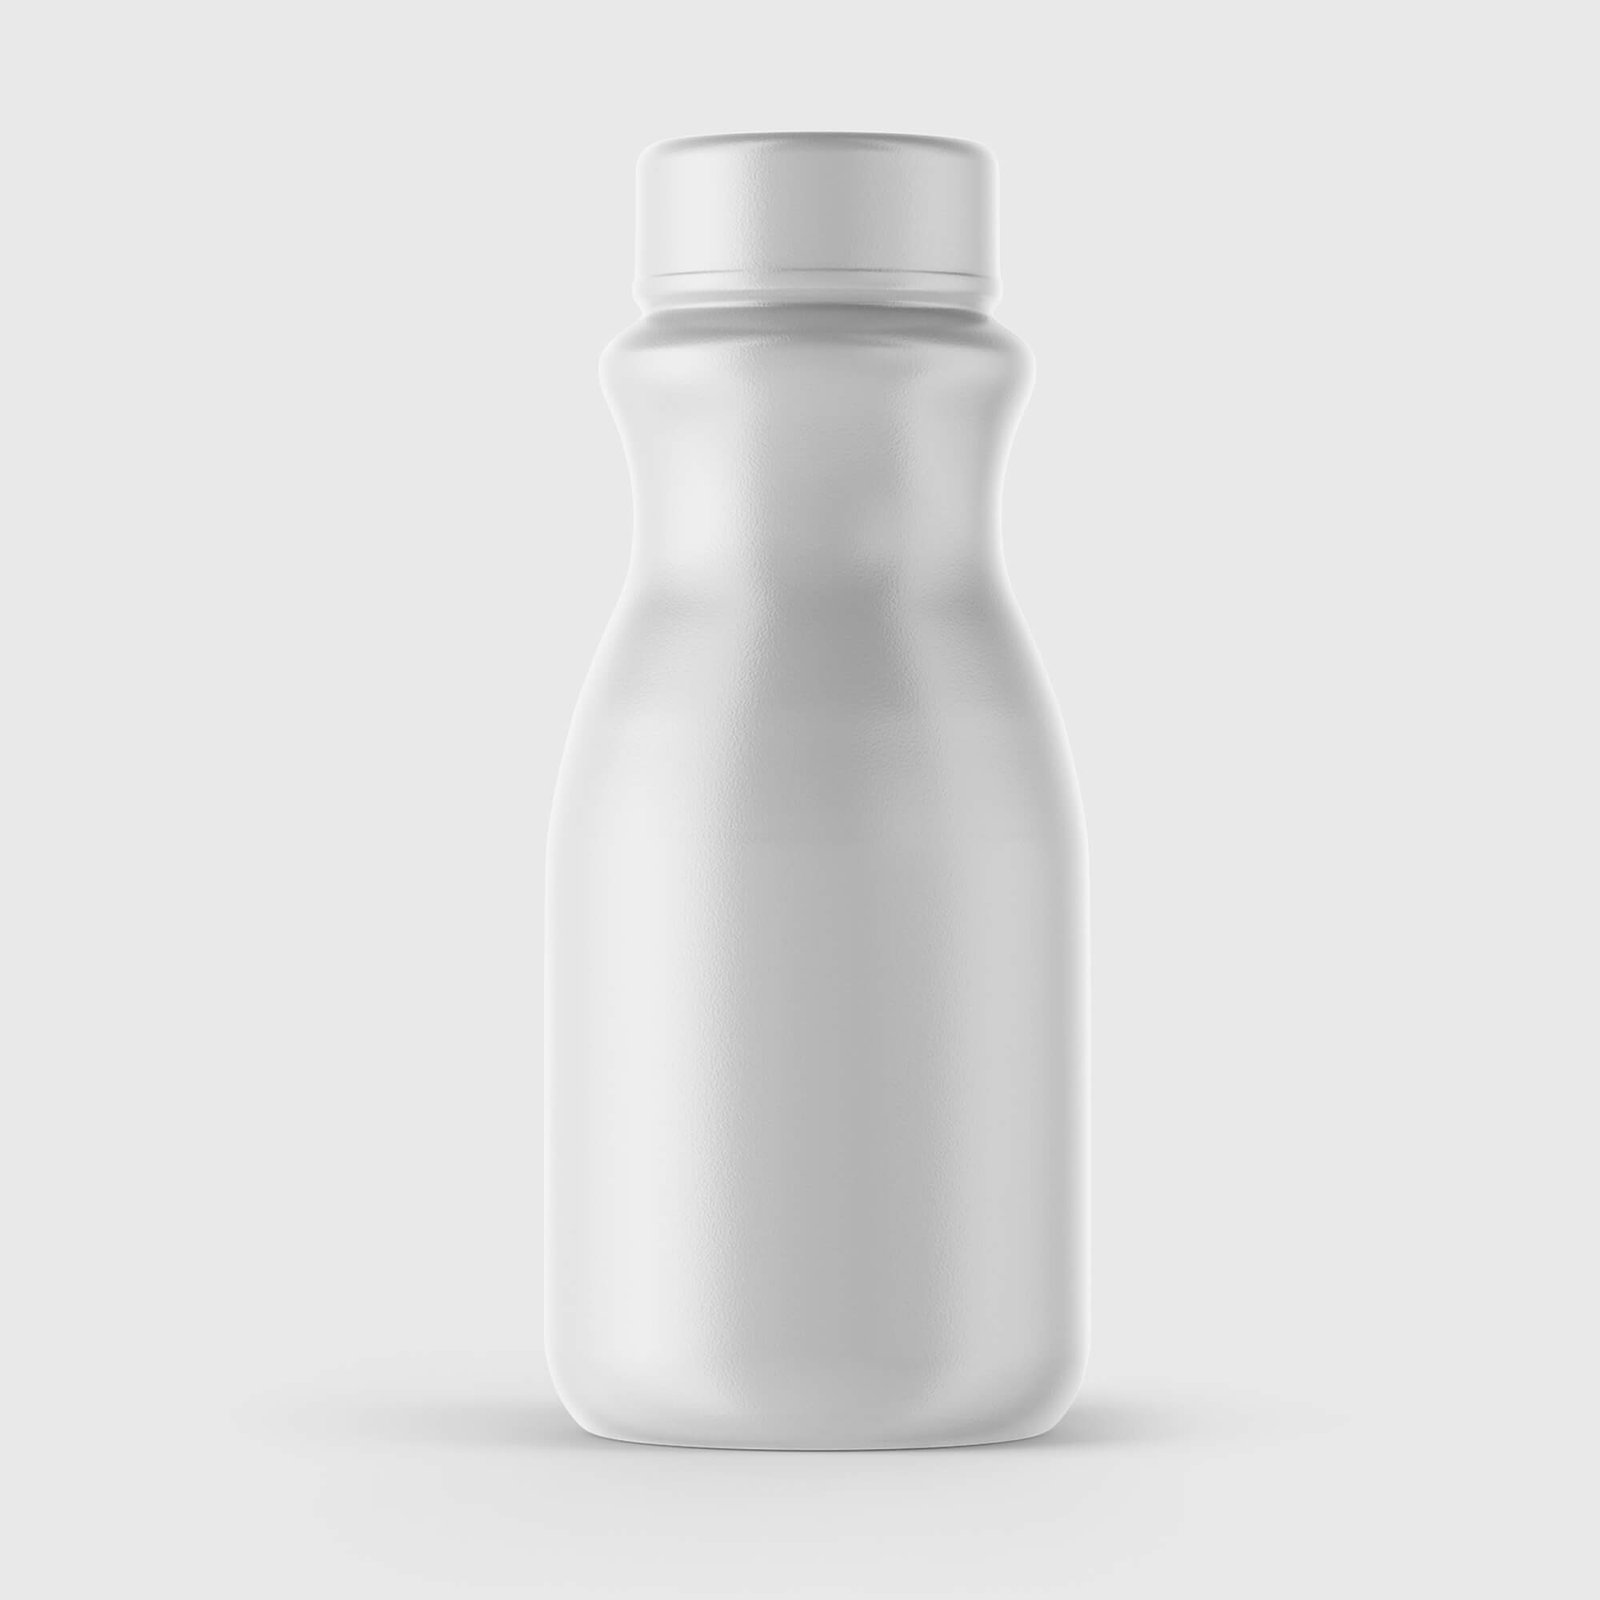 Blank Free Swell Bottle Mockup PSD Template